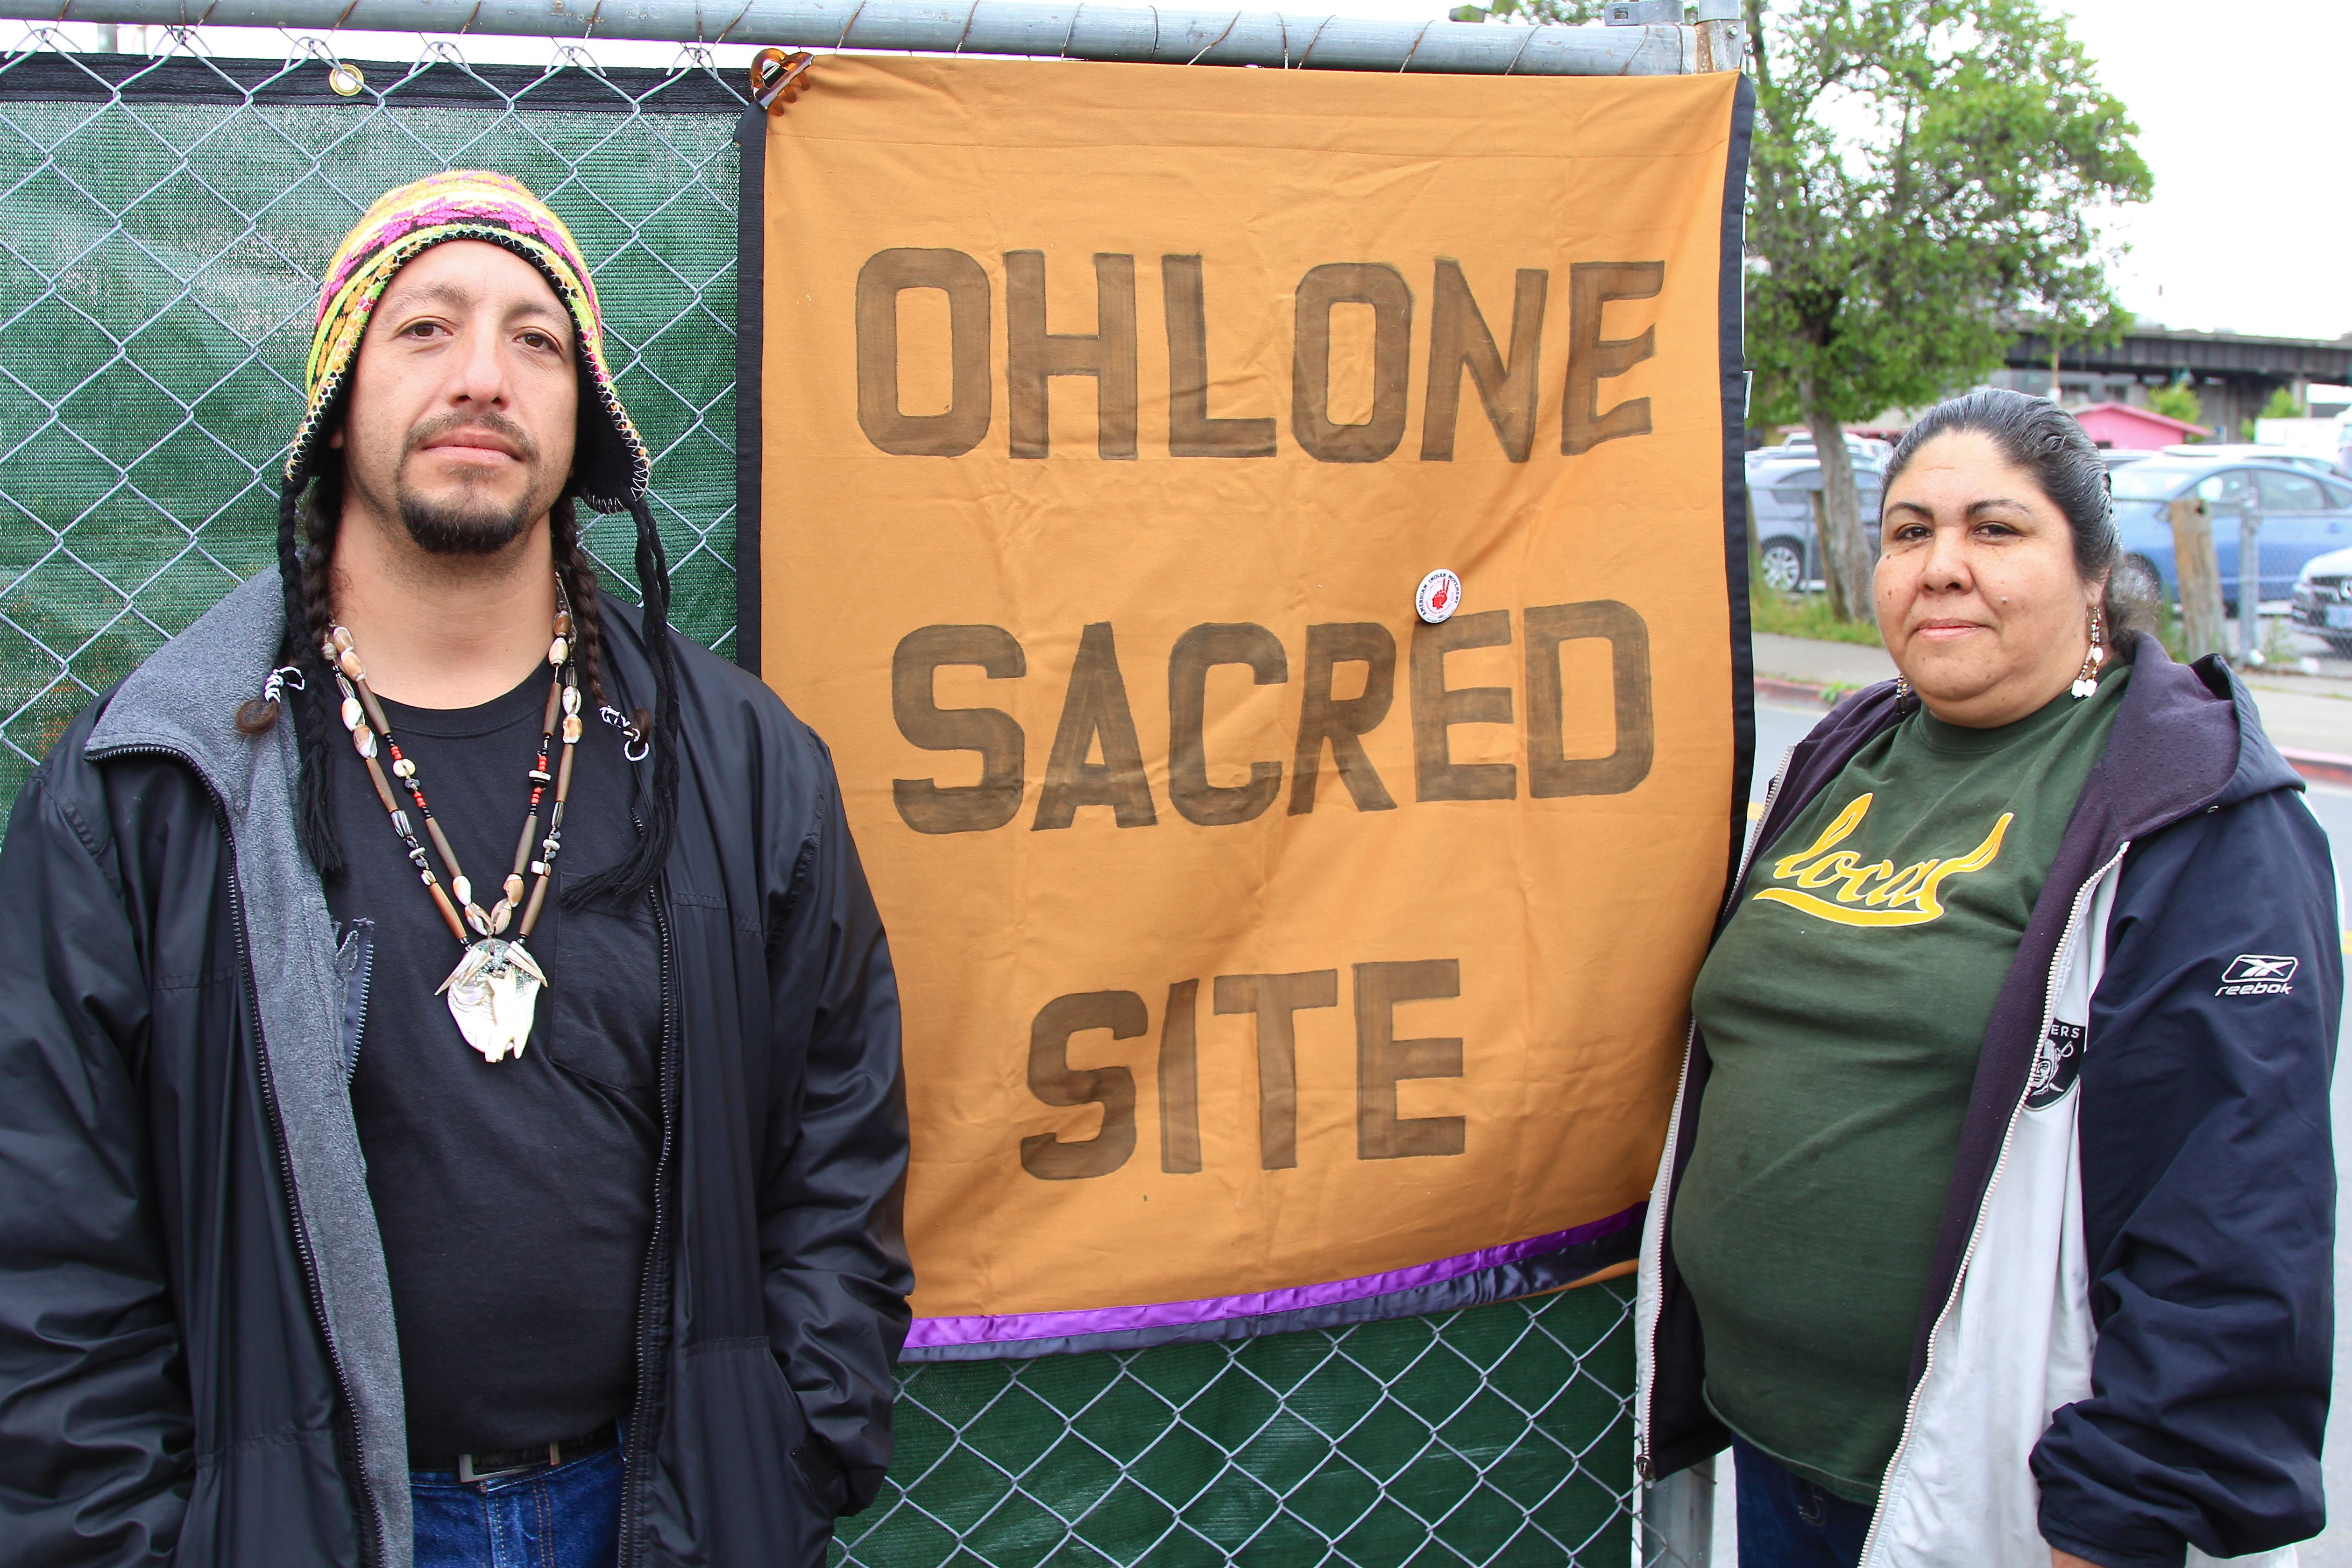 Ohlone Burial Disturbed in Berkeley – Sacred Land